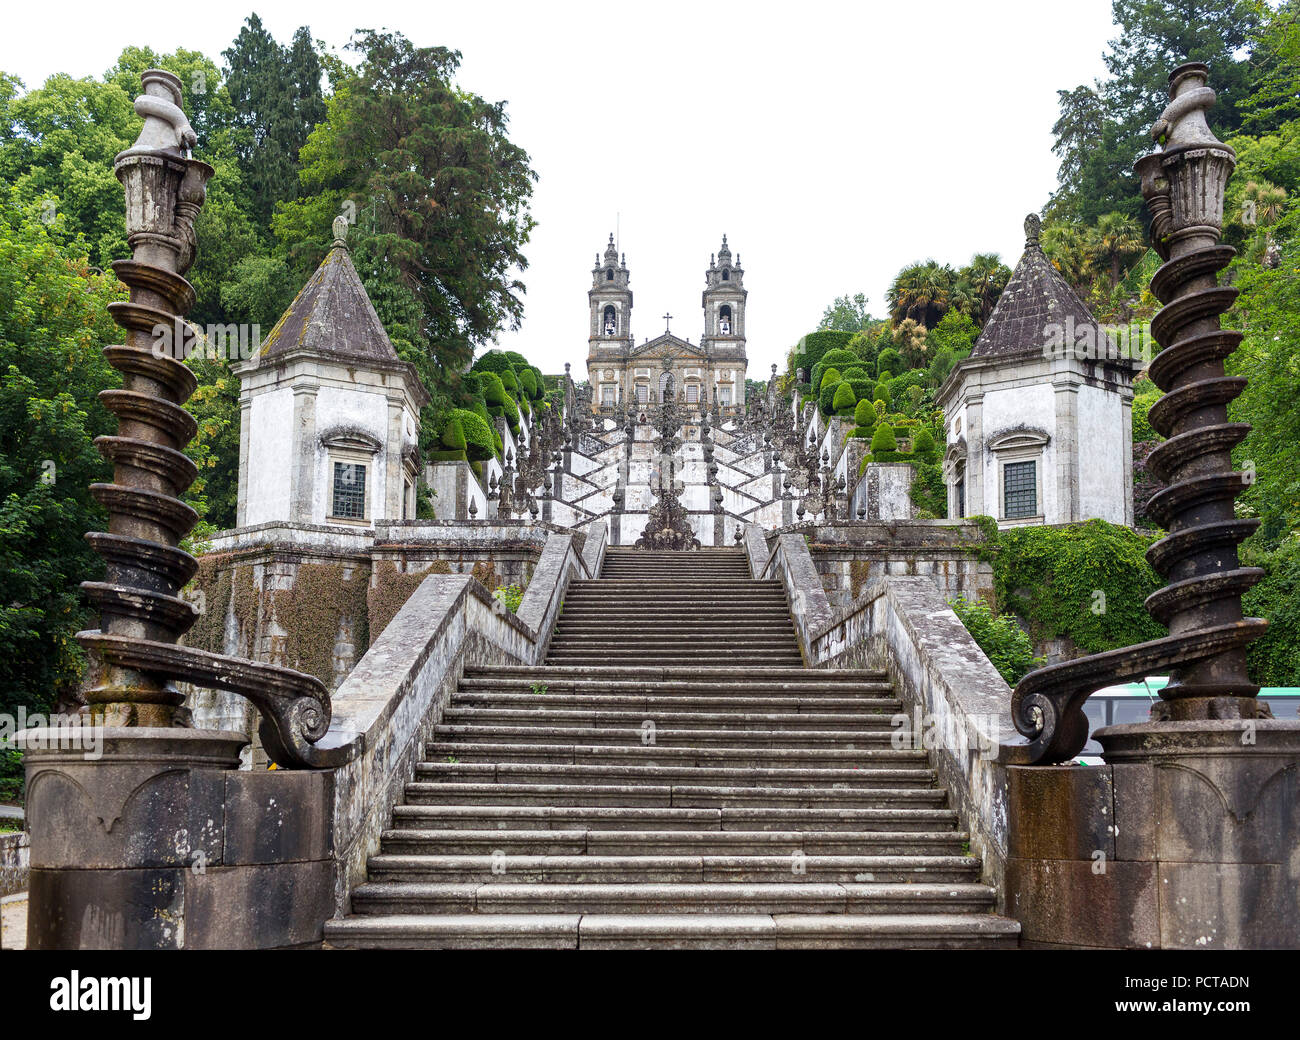 Les cinq sens de l'escalier, Bom Jesus do Monte, sanctuaire de Braga, Braga, Braga, Portugal, Europe Banque D'Images